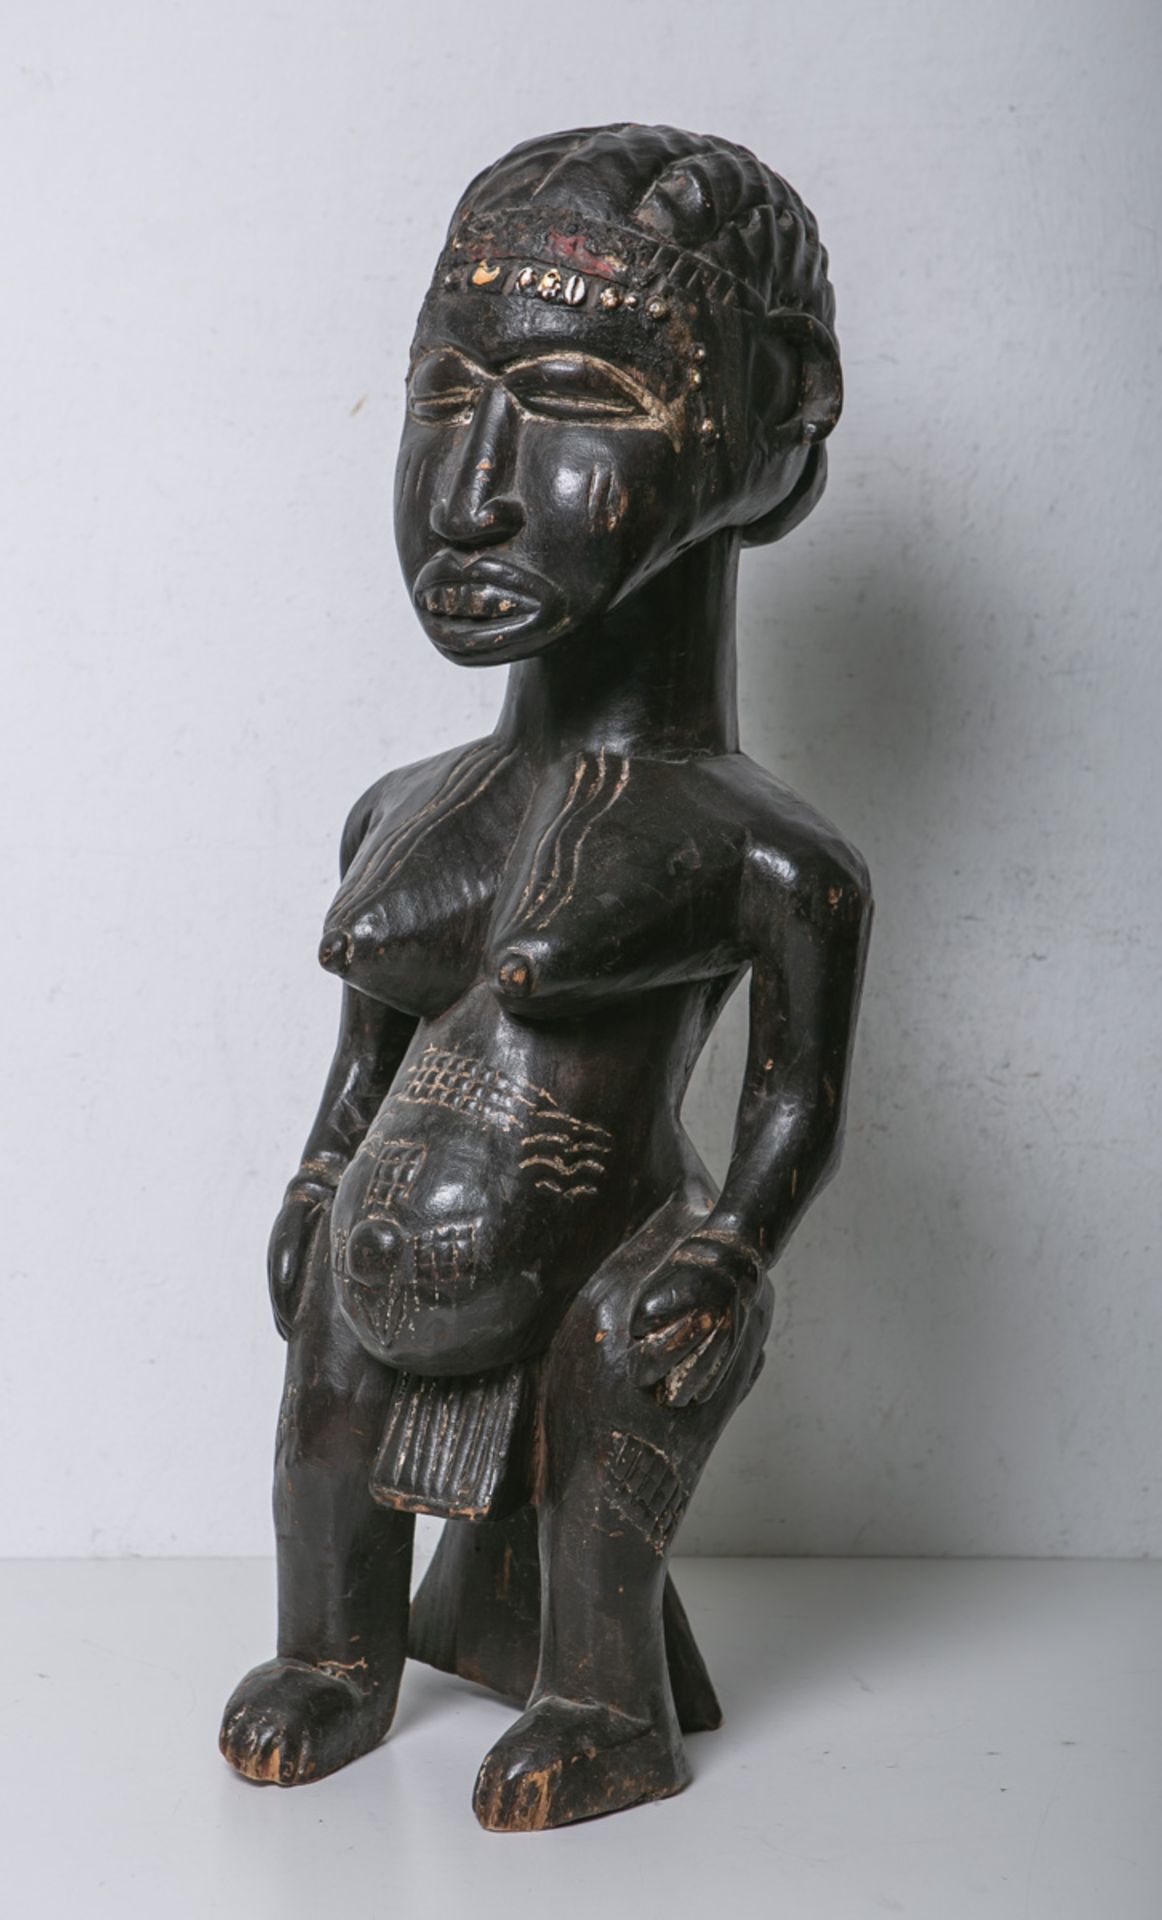 Holzfigur (wohl Mbunda/Sambia, wohl 19. Jh.), weibl. schwangere Figur